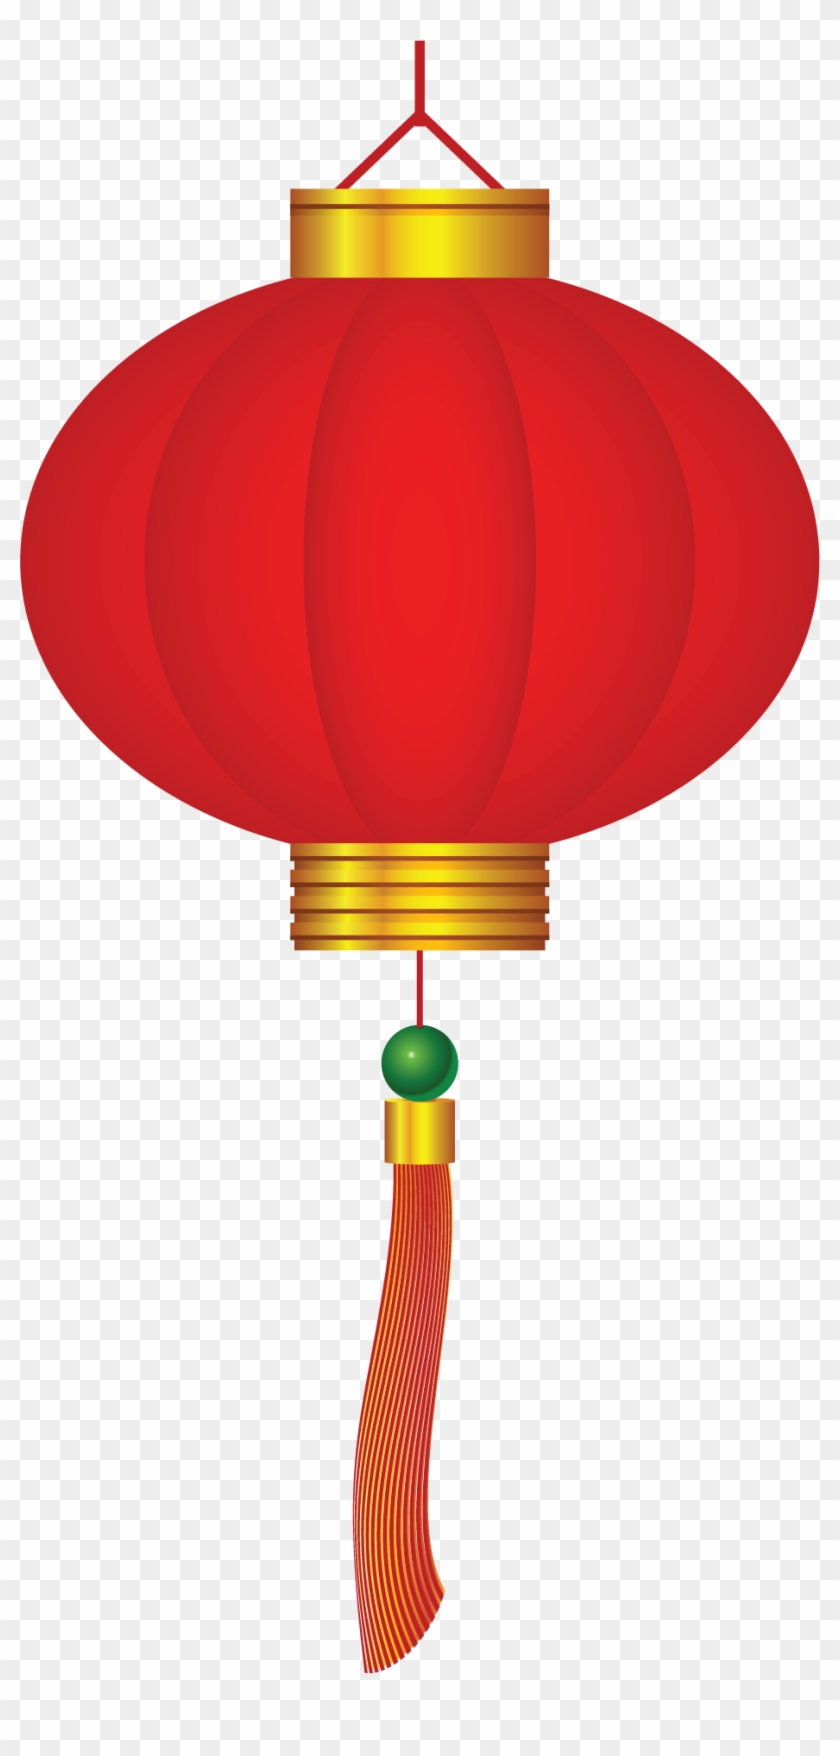 Lantern Clipart Mandarin Language - 918kiss Chinese New Year - Png Download #377184